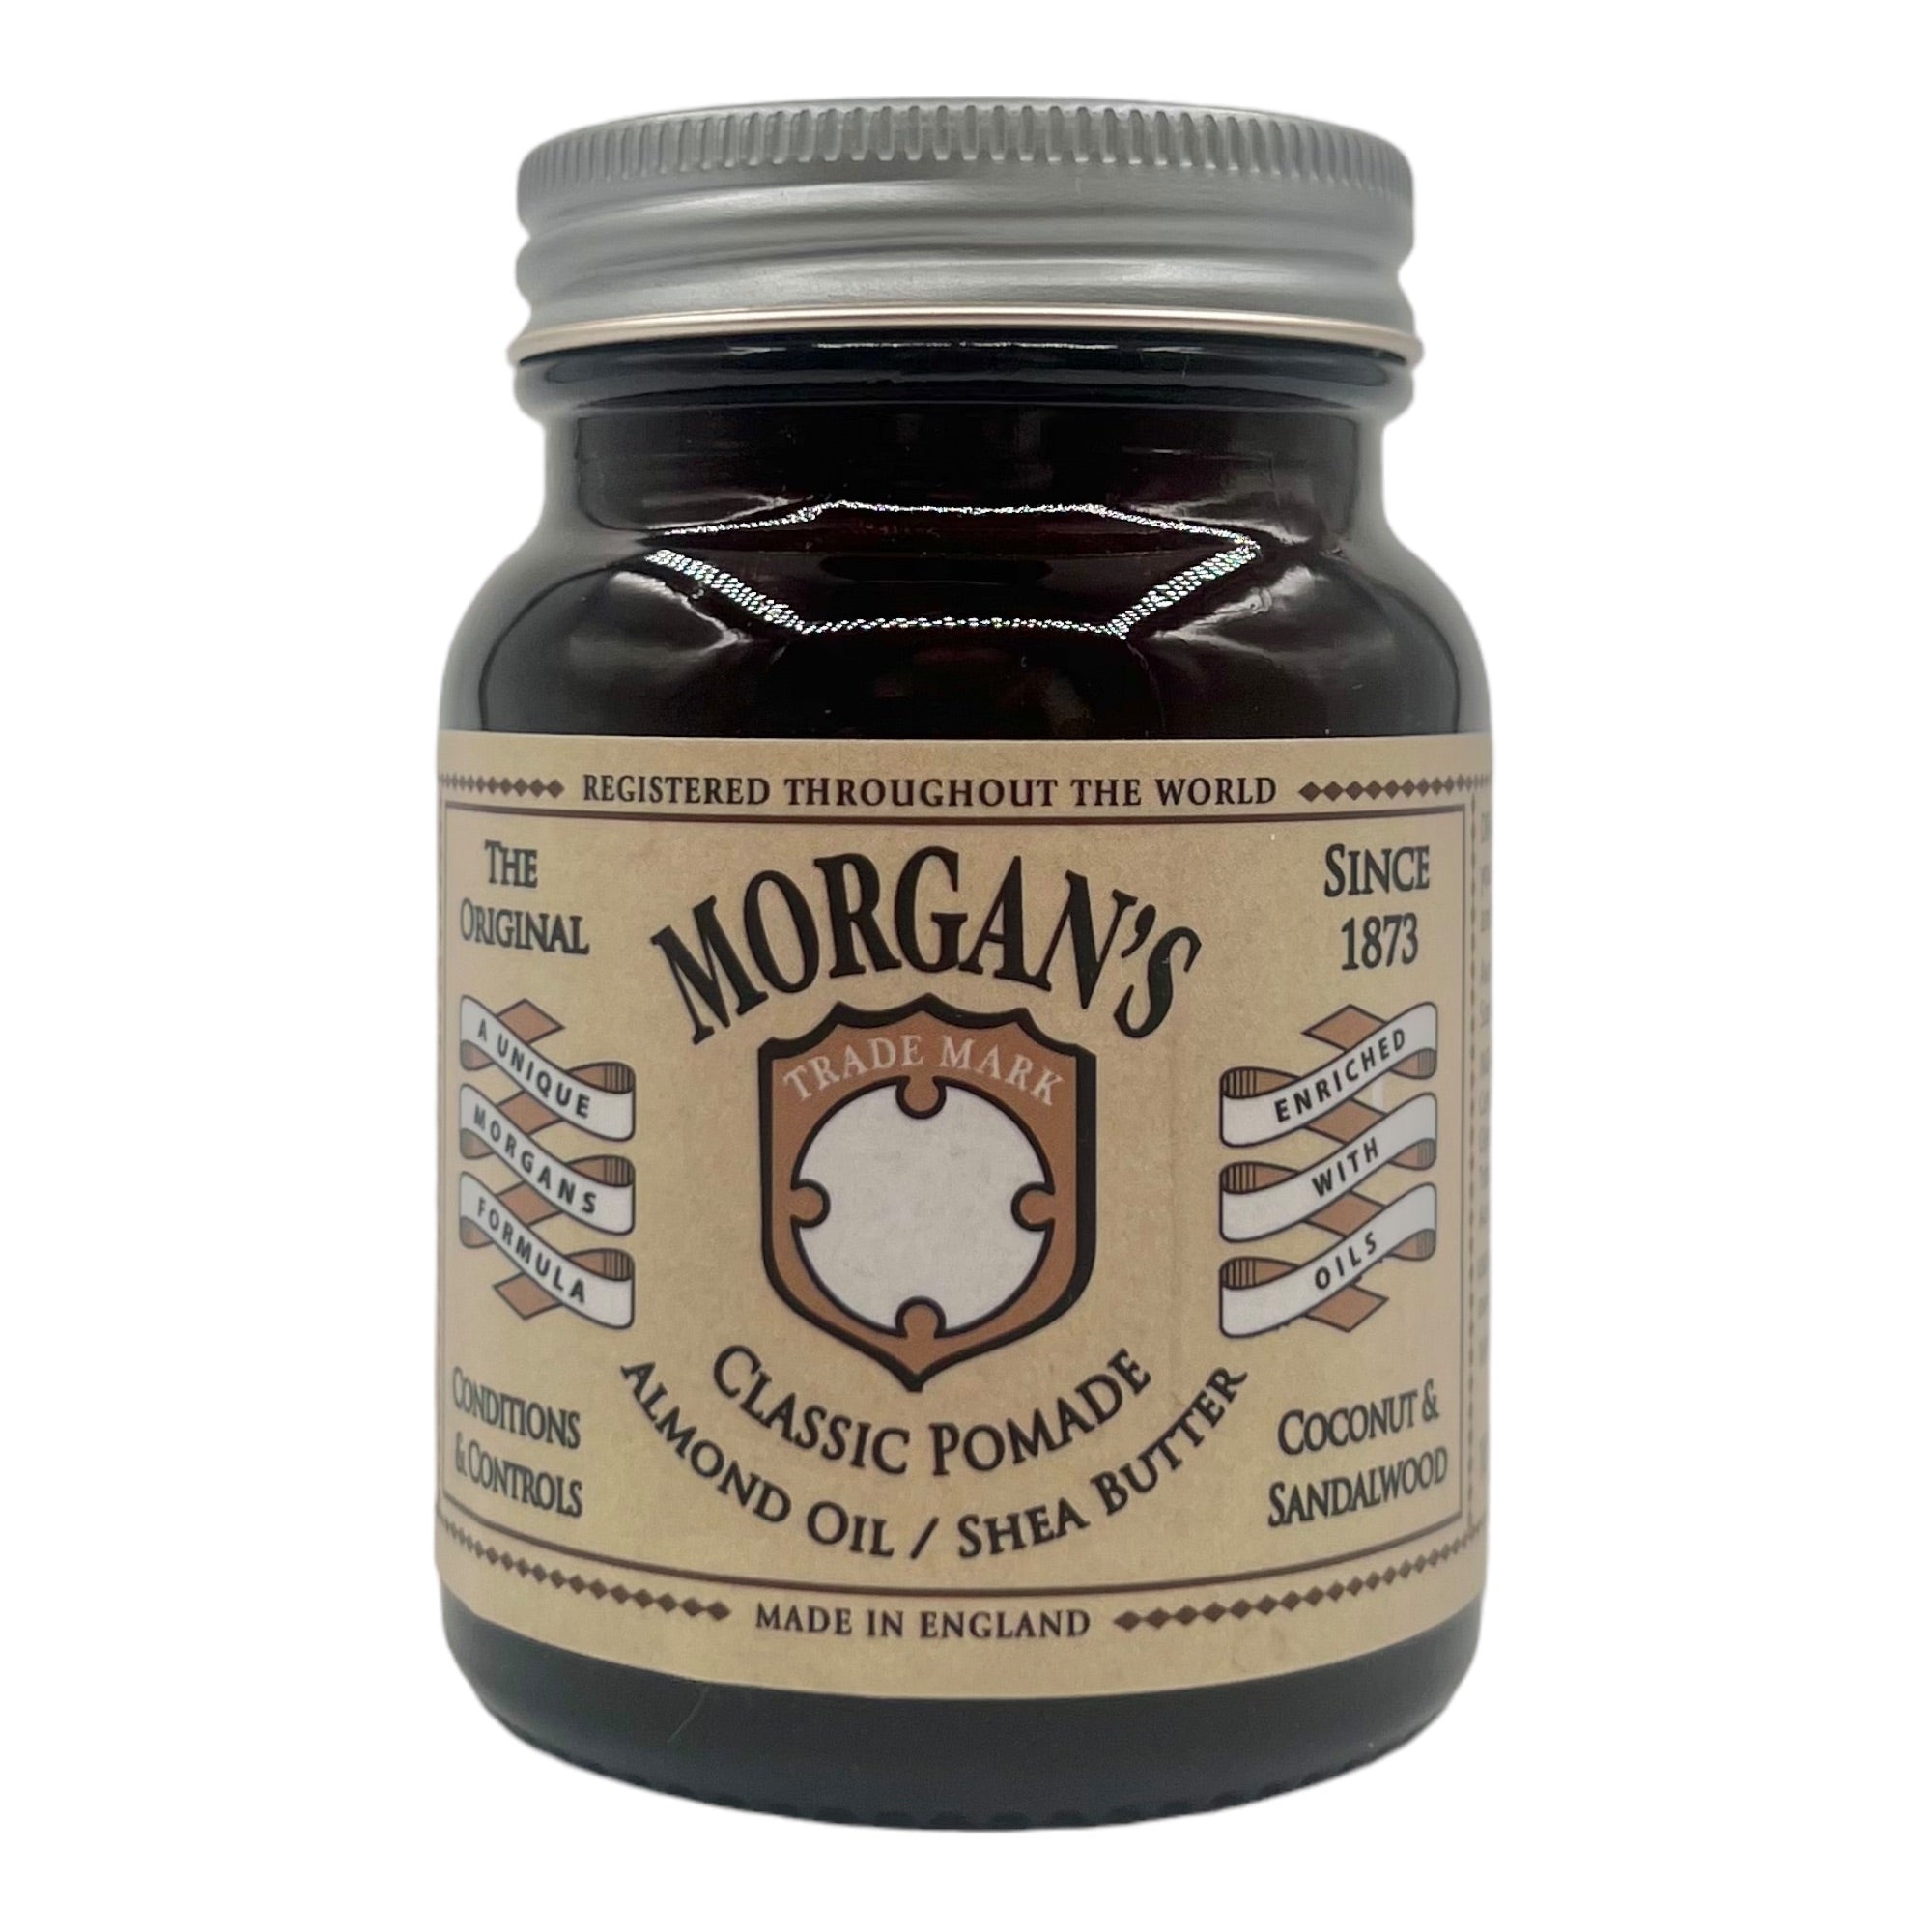 Morgan's - Classic Pomade Almond Oil Shea Butter 100g